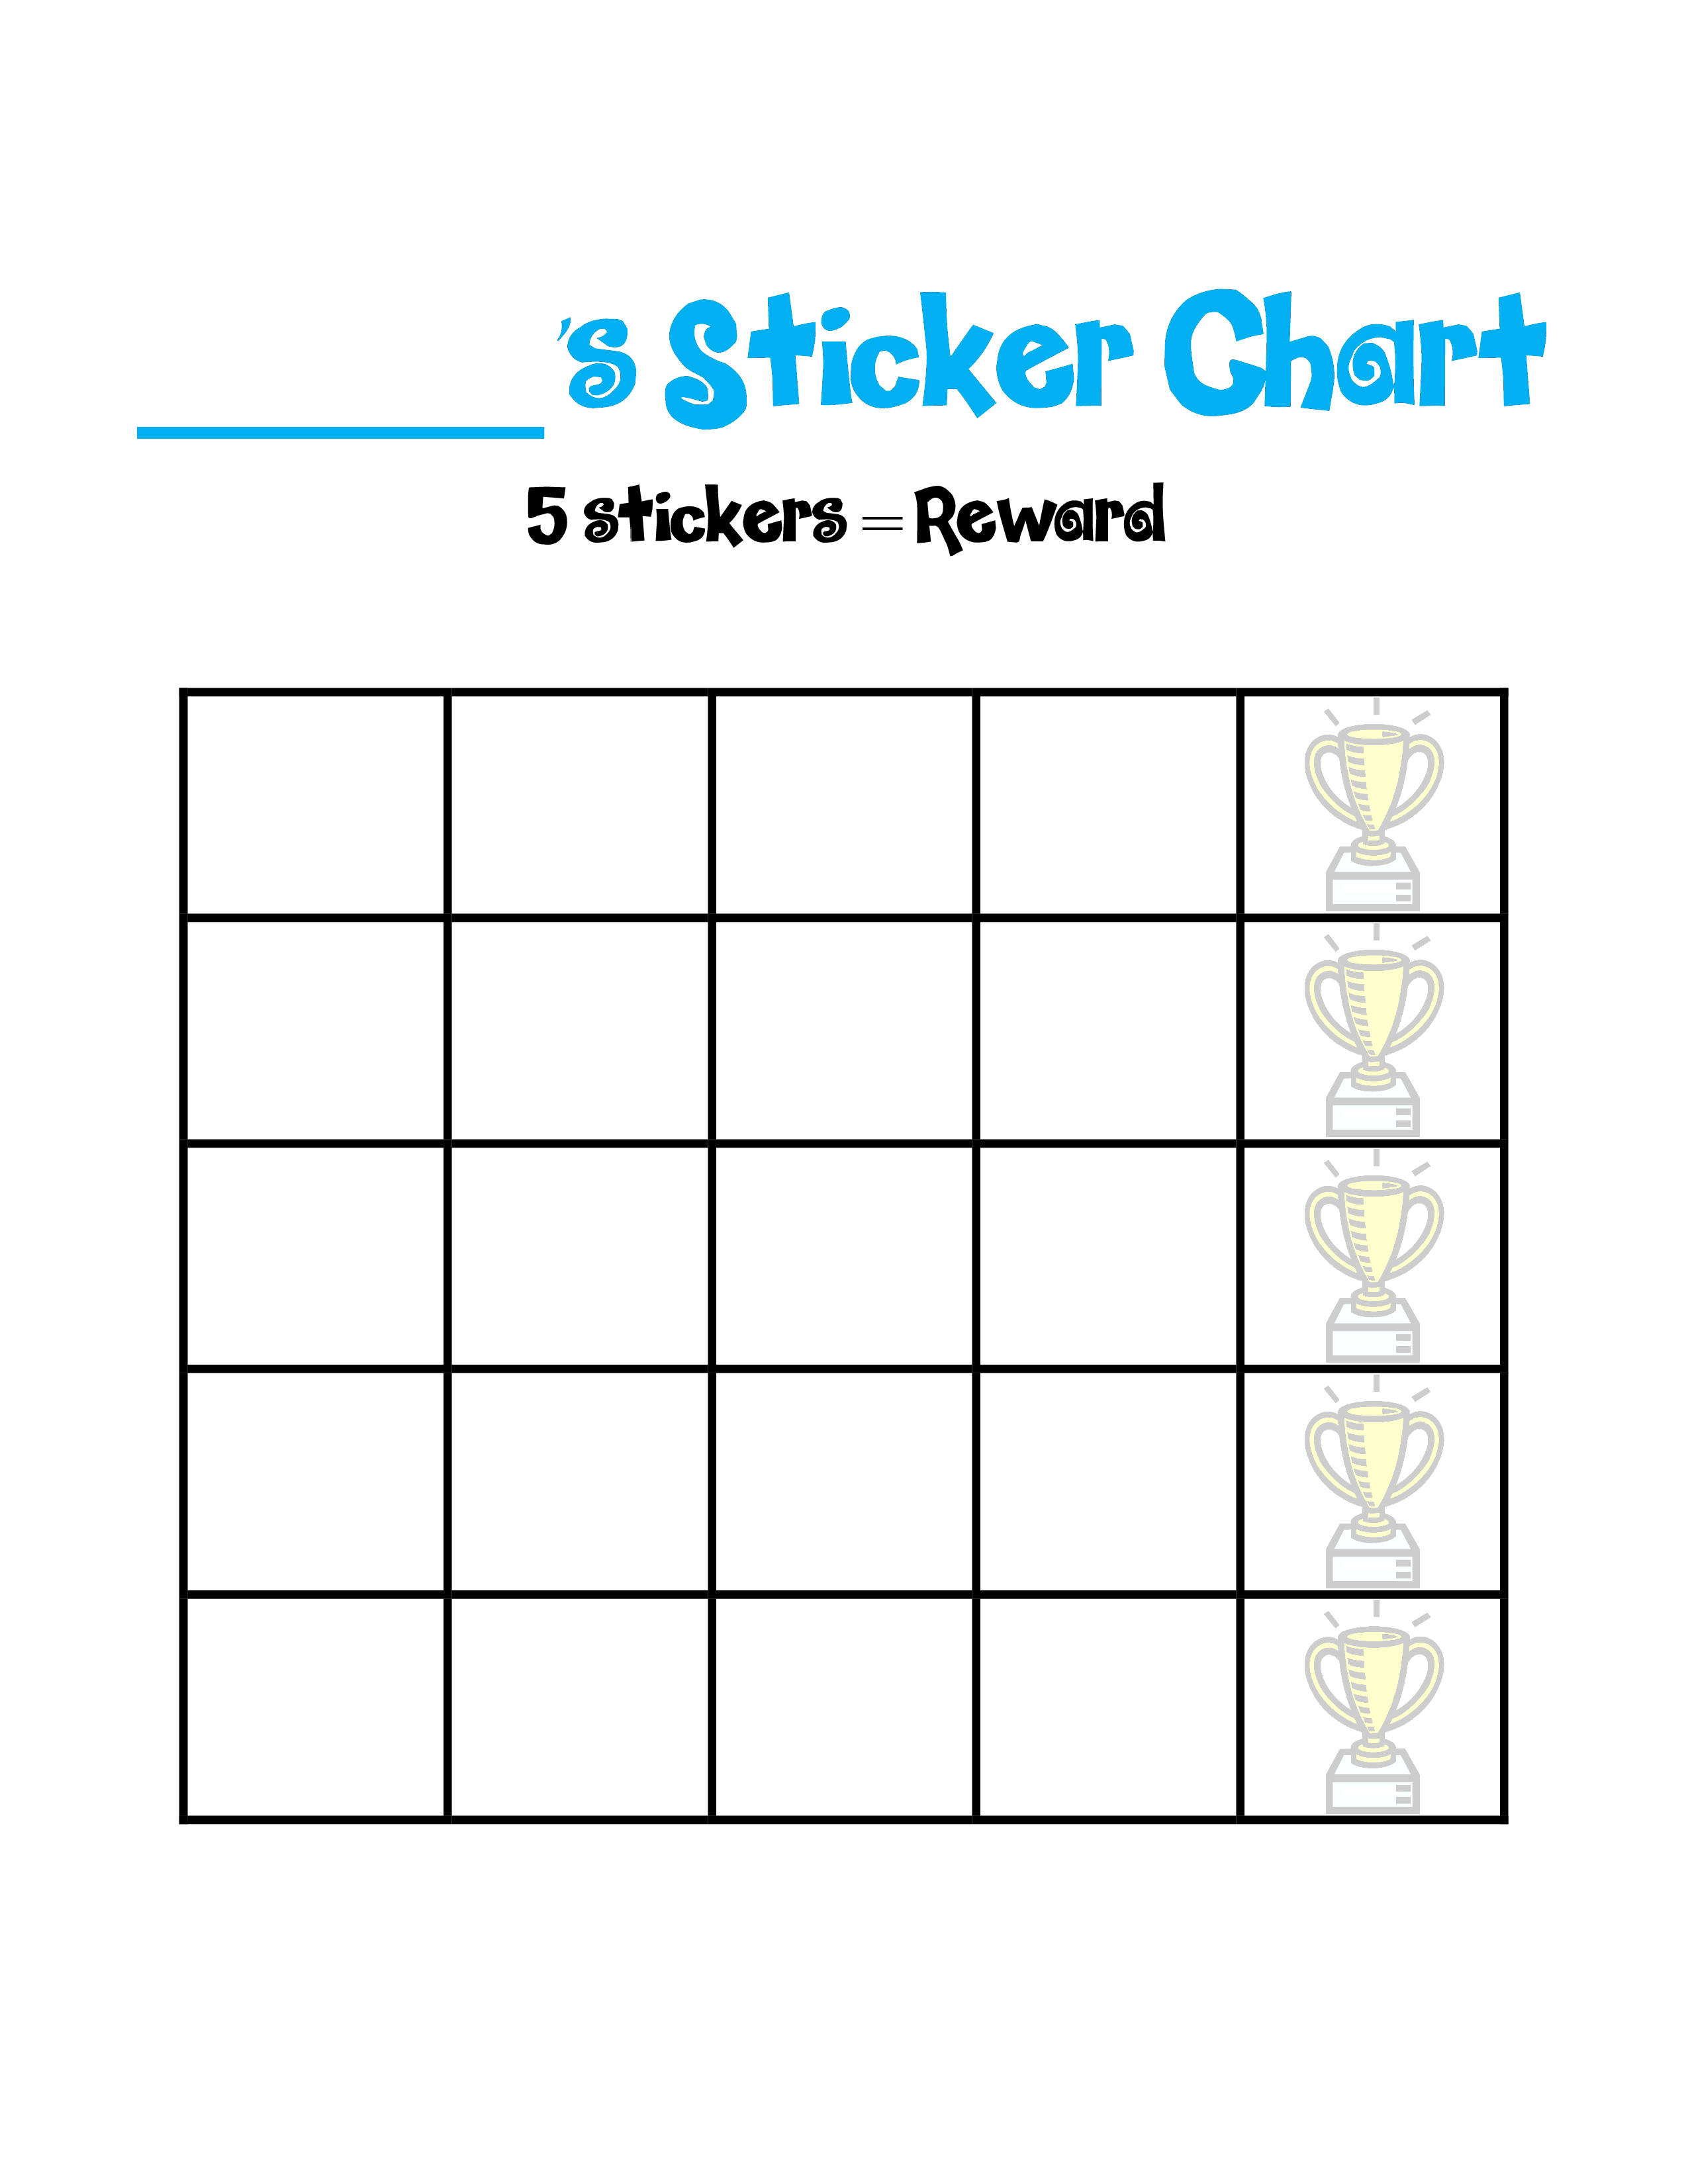 blank-sticker-chart-templates-at-allbusinesstemplates